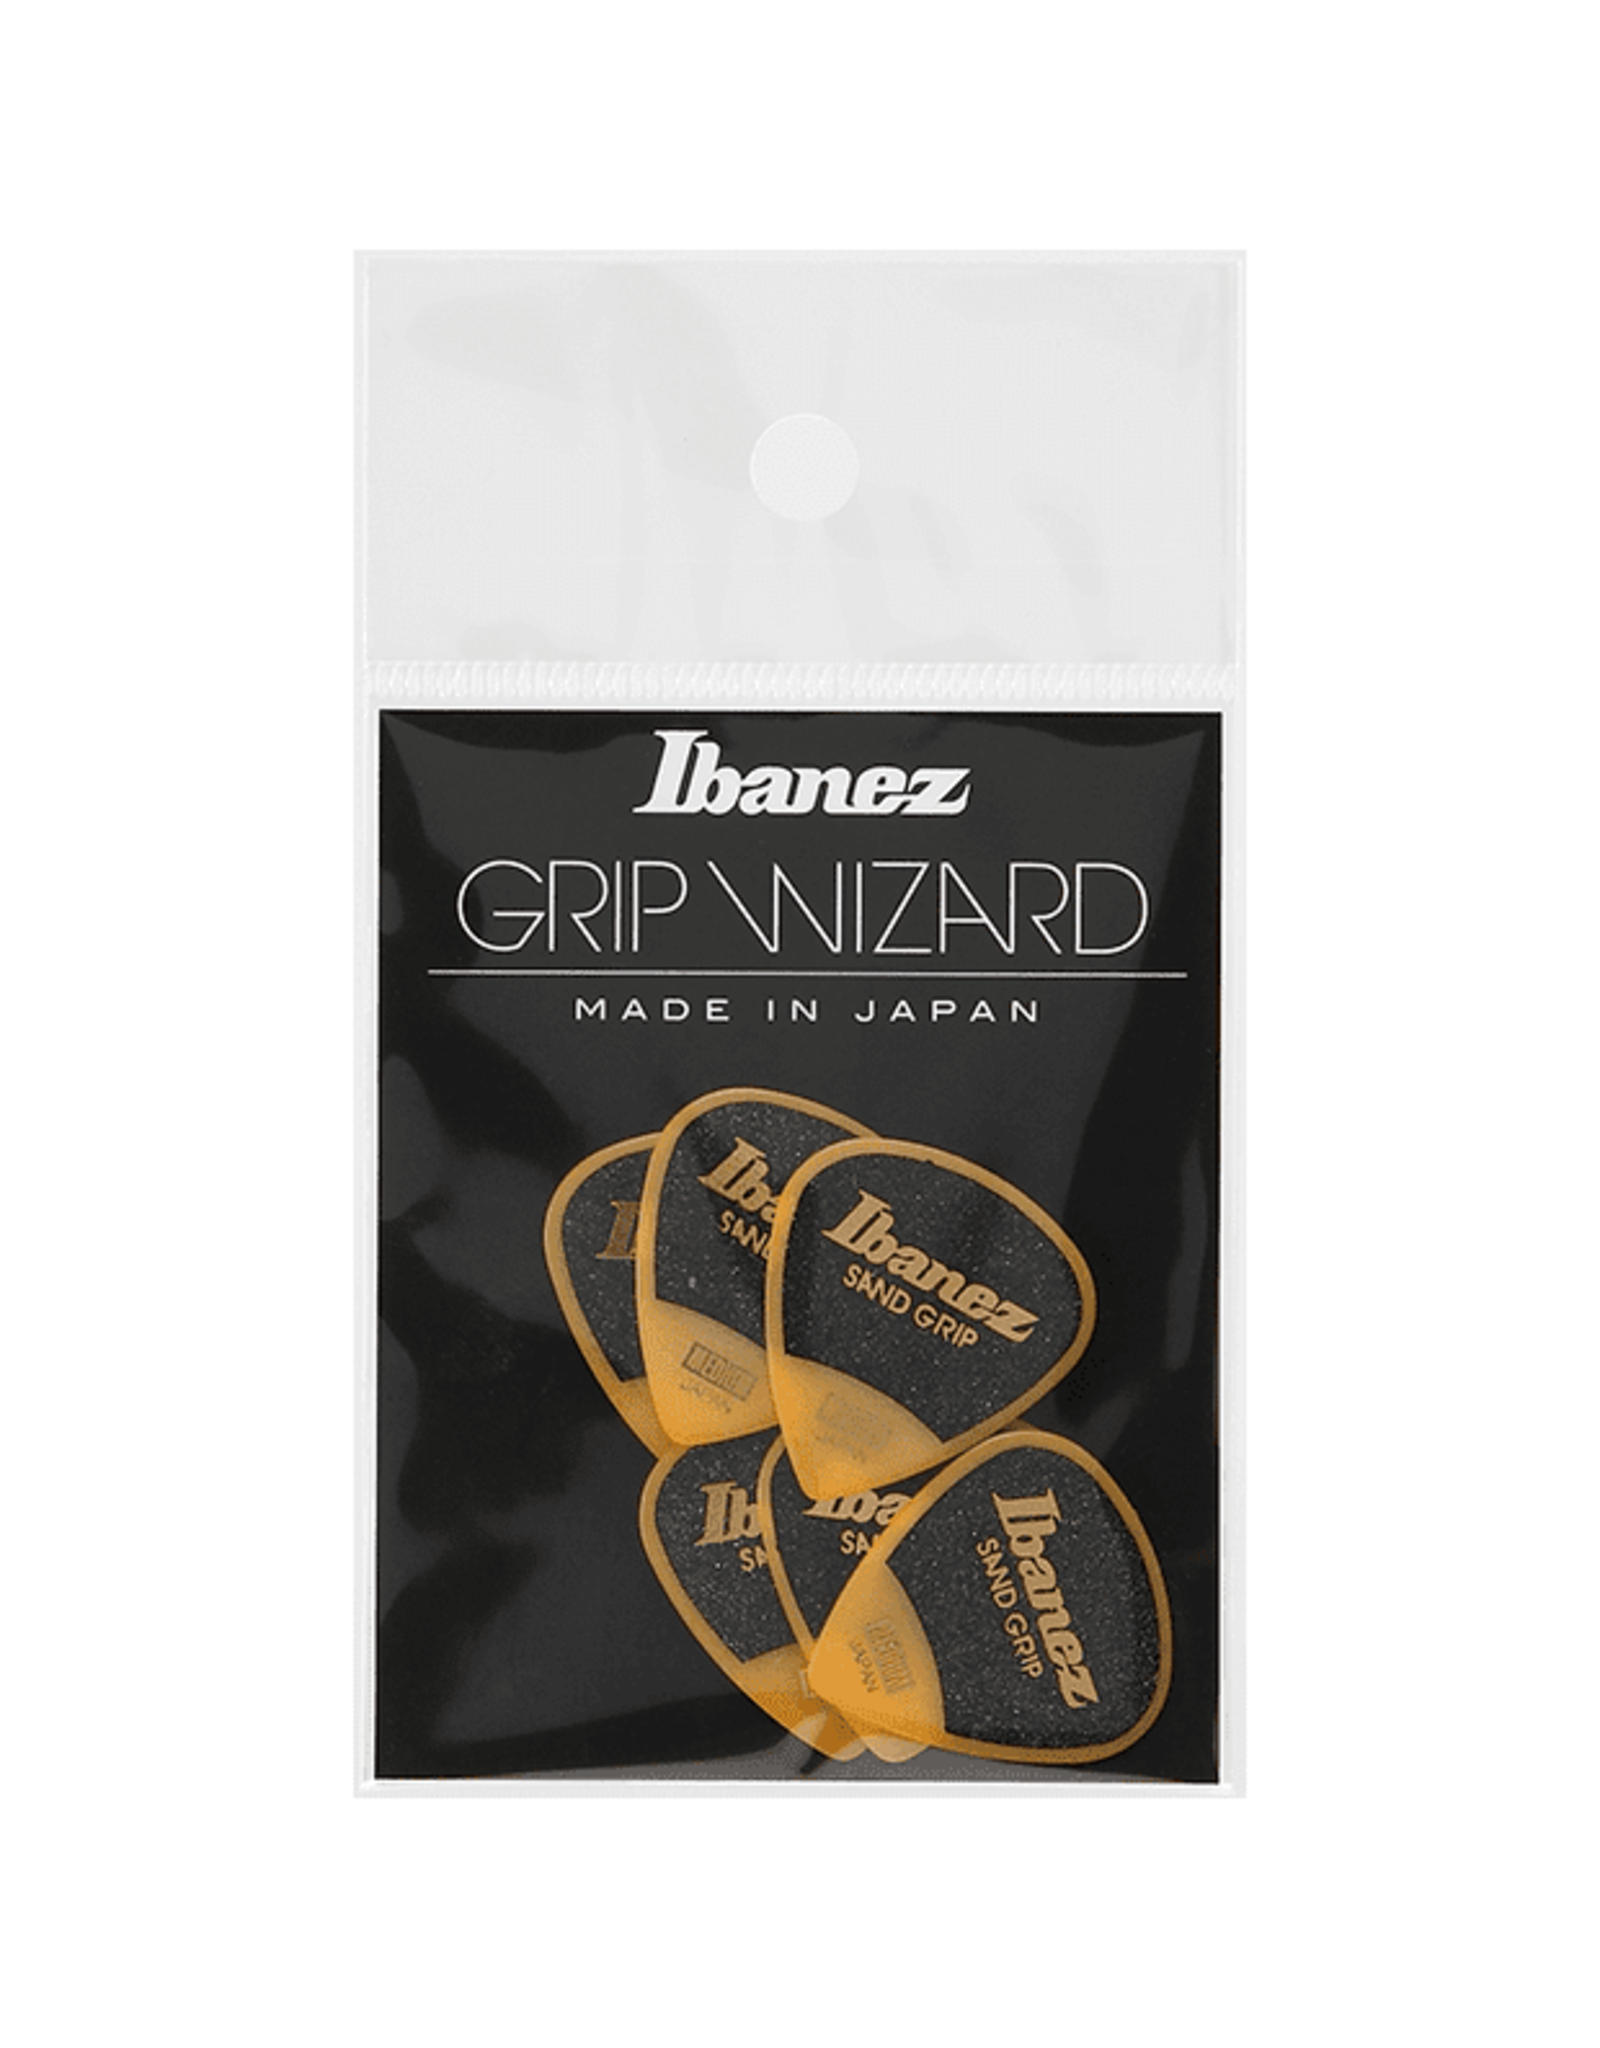 Ibanez Ibanez Grip Wizard Series Sand Grip Guitar Pick .8 Gauge 6 Pack Yellow